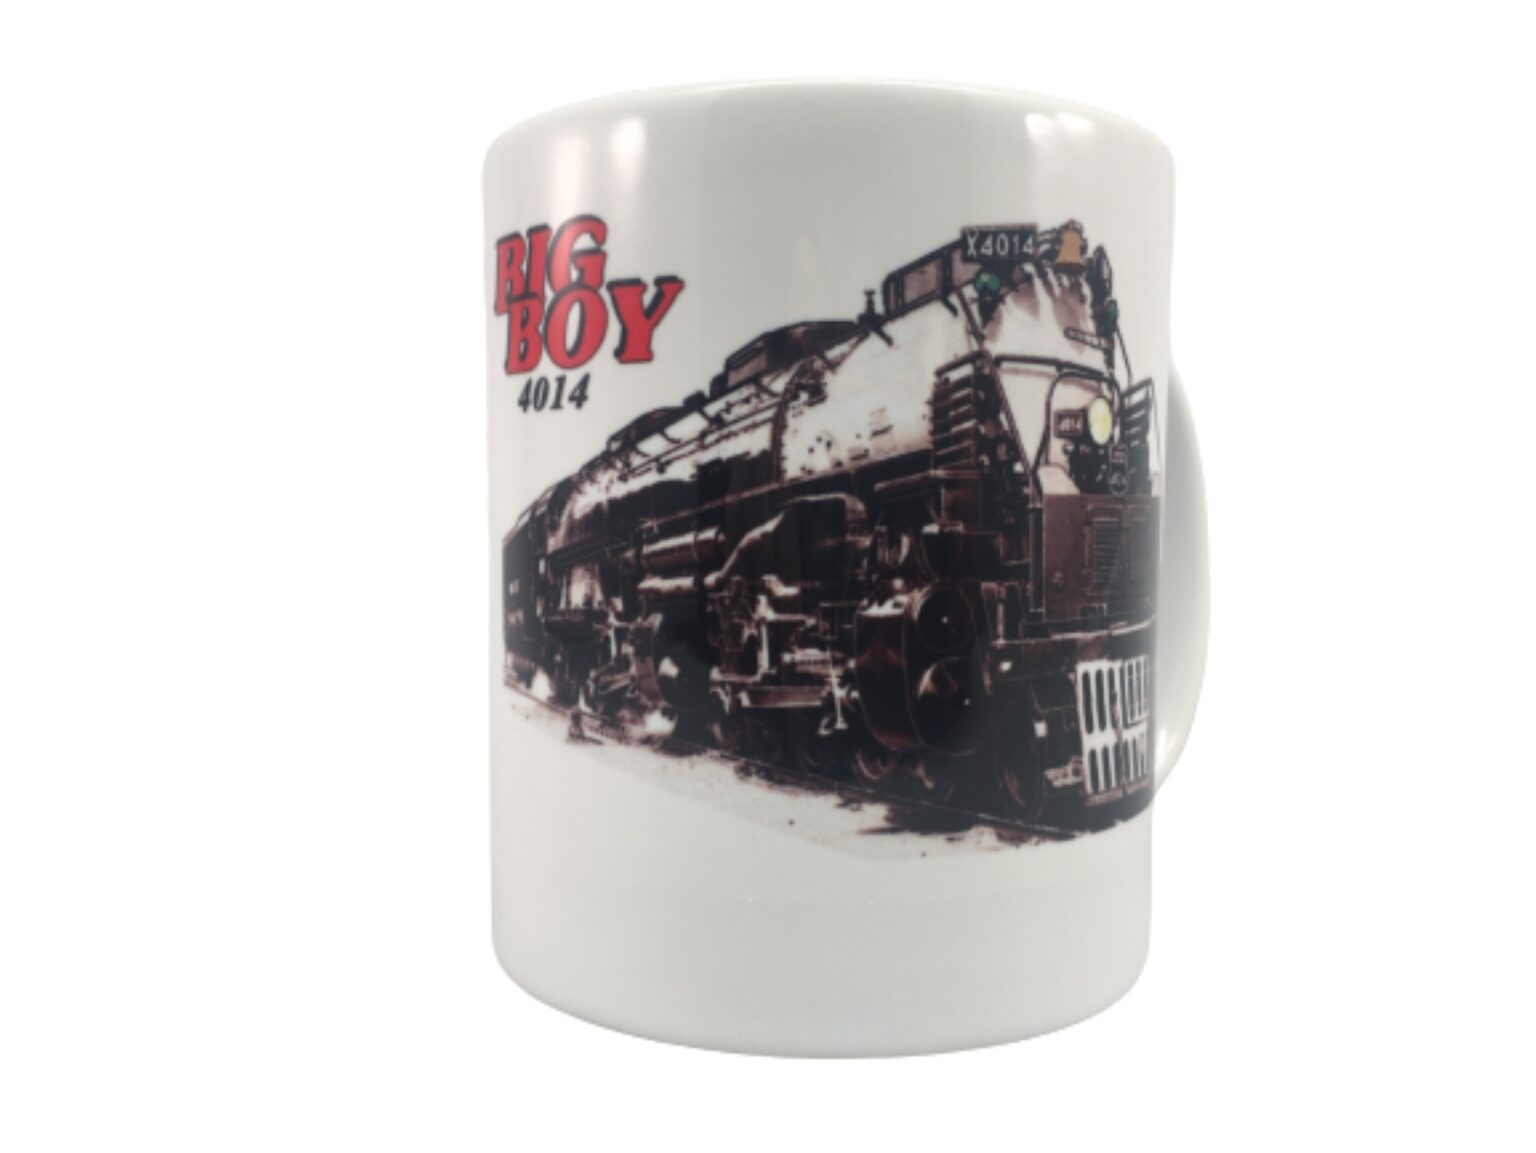 Union Pacific Big Boy 4014 Coffee Mug - MrTrain